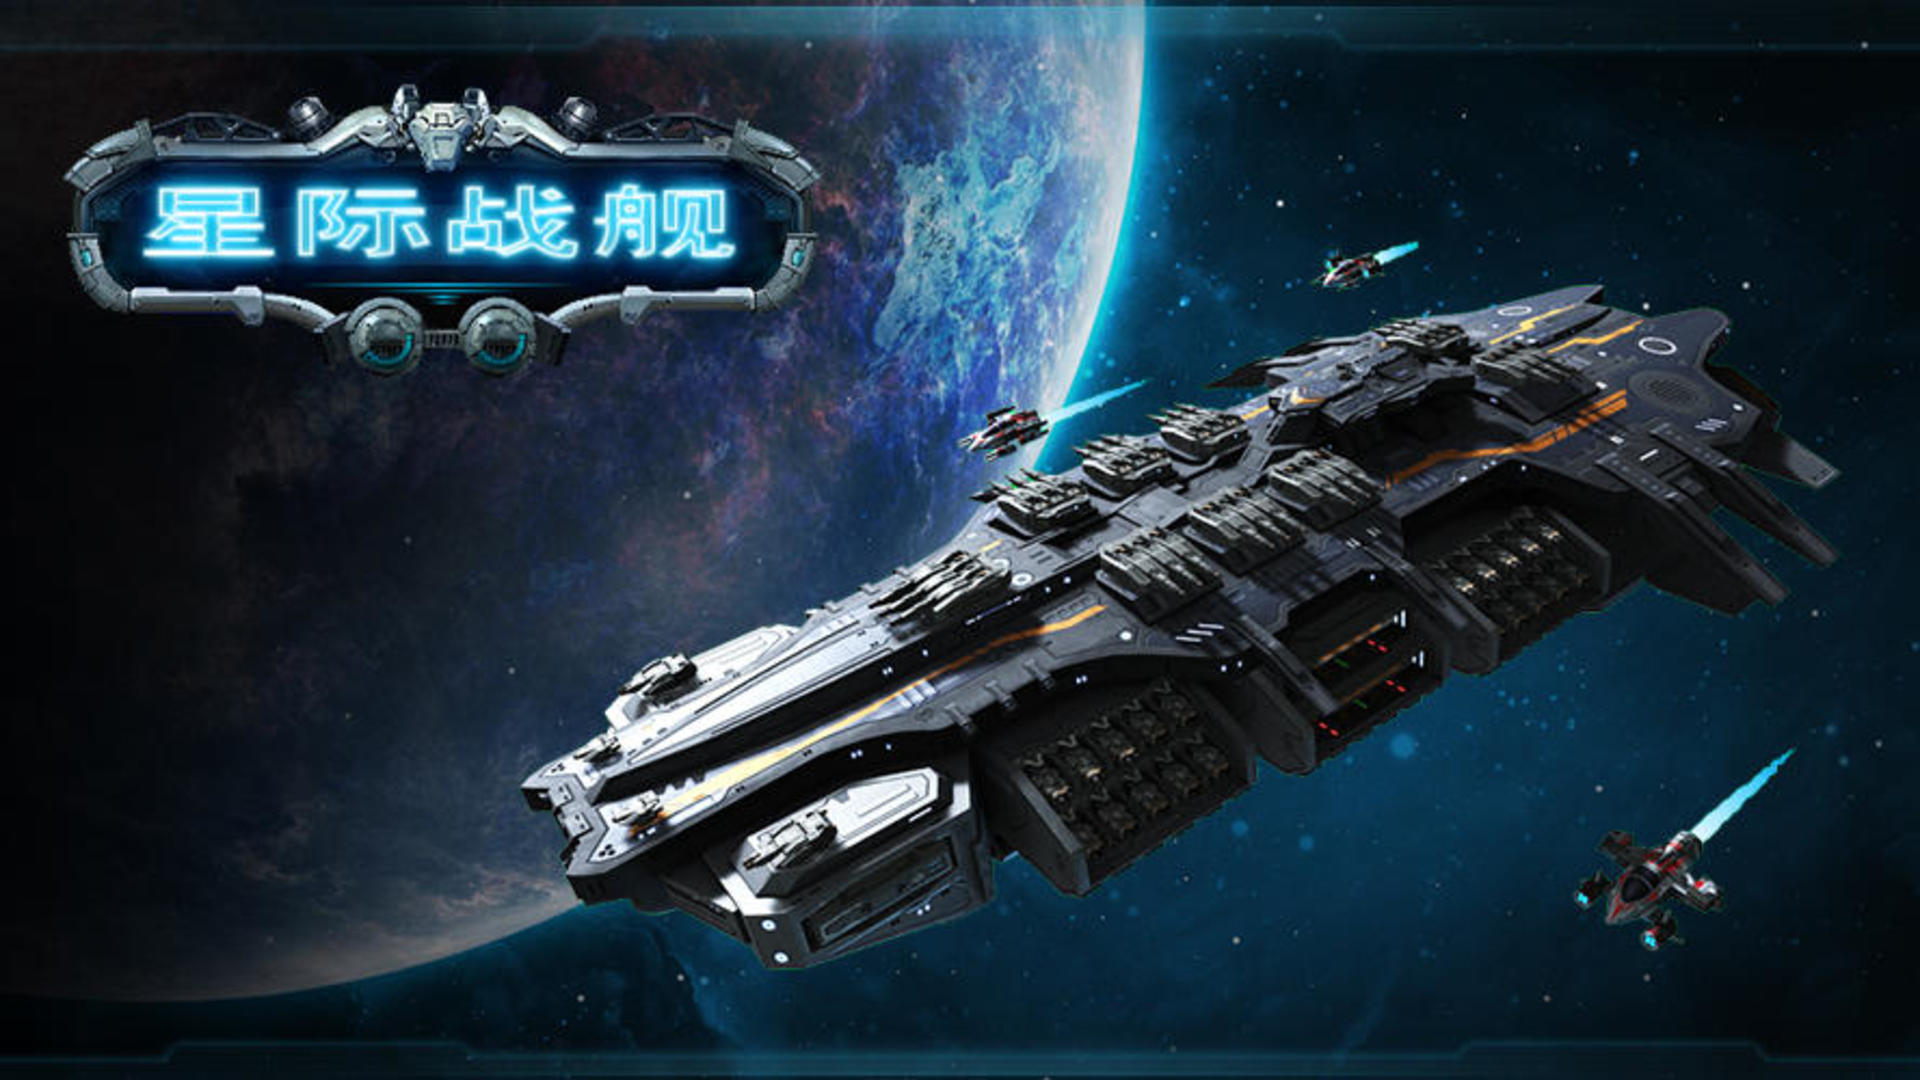 Banner of nave da guerra stellare 